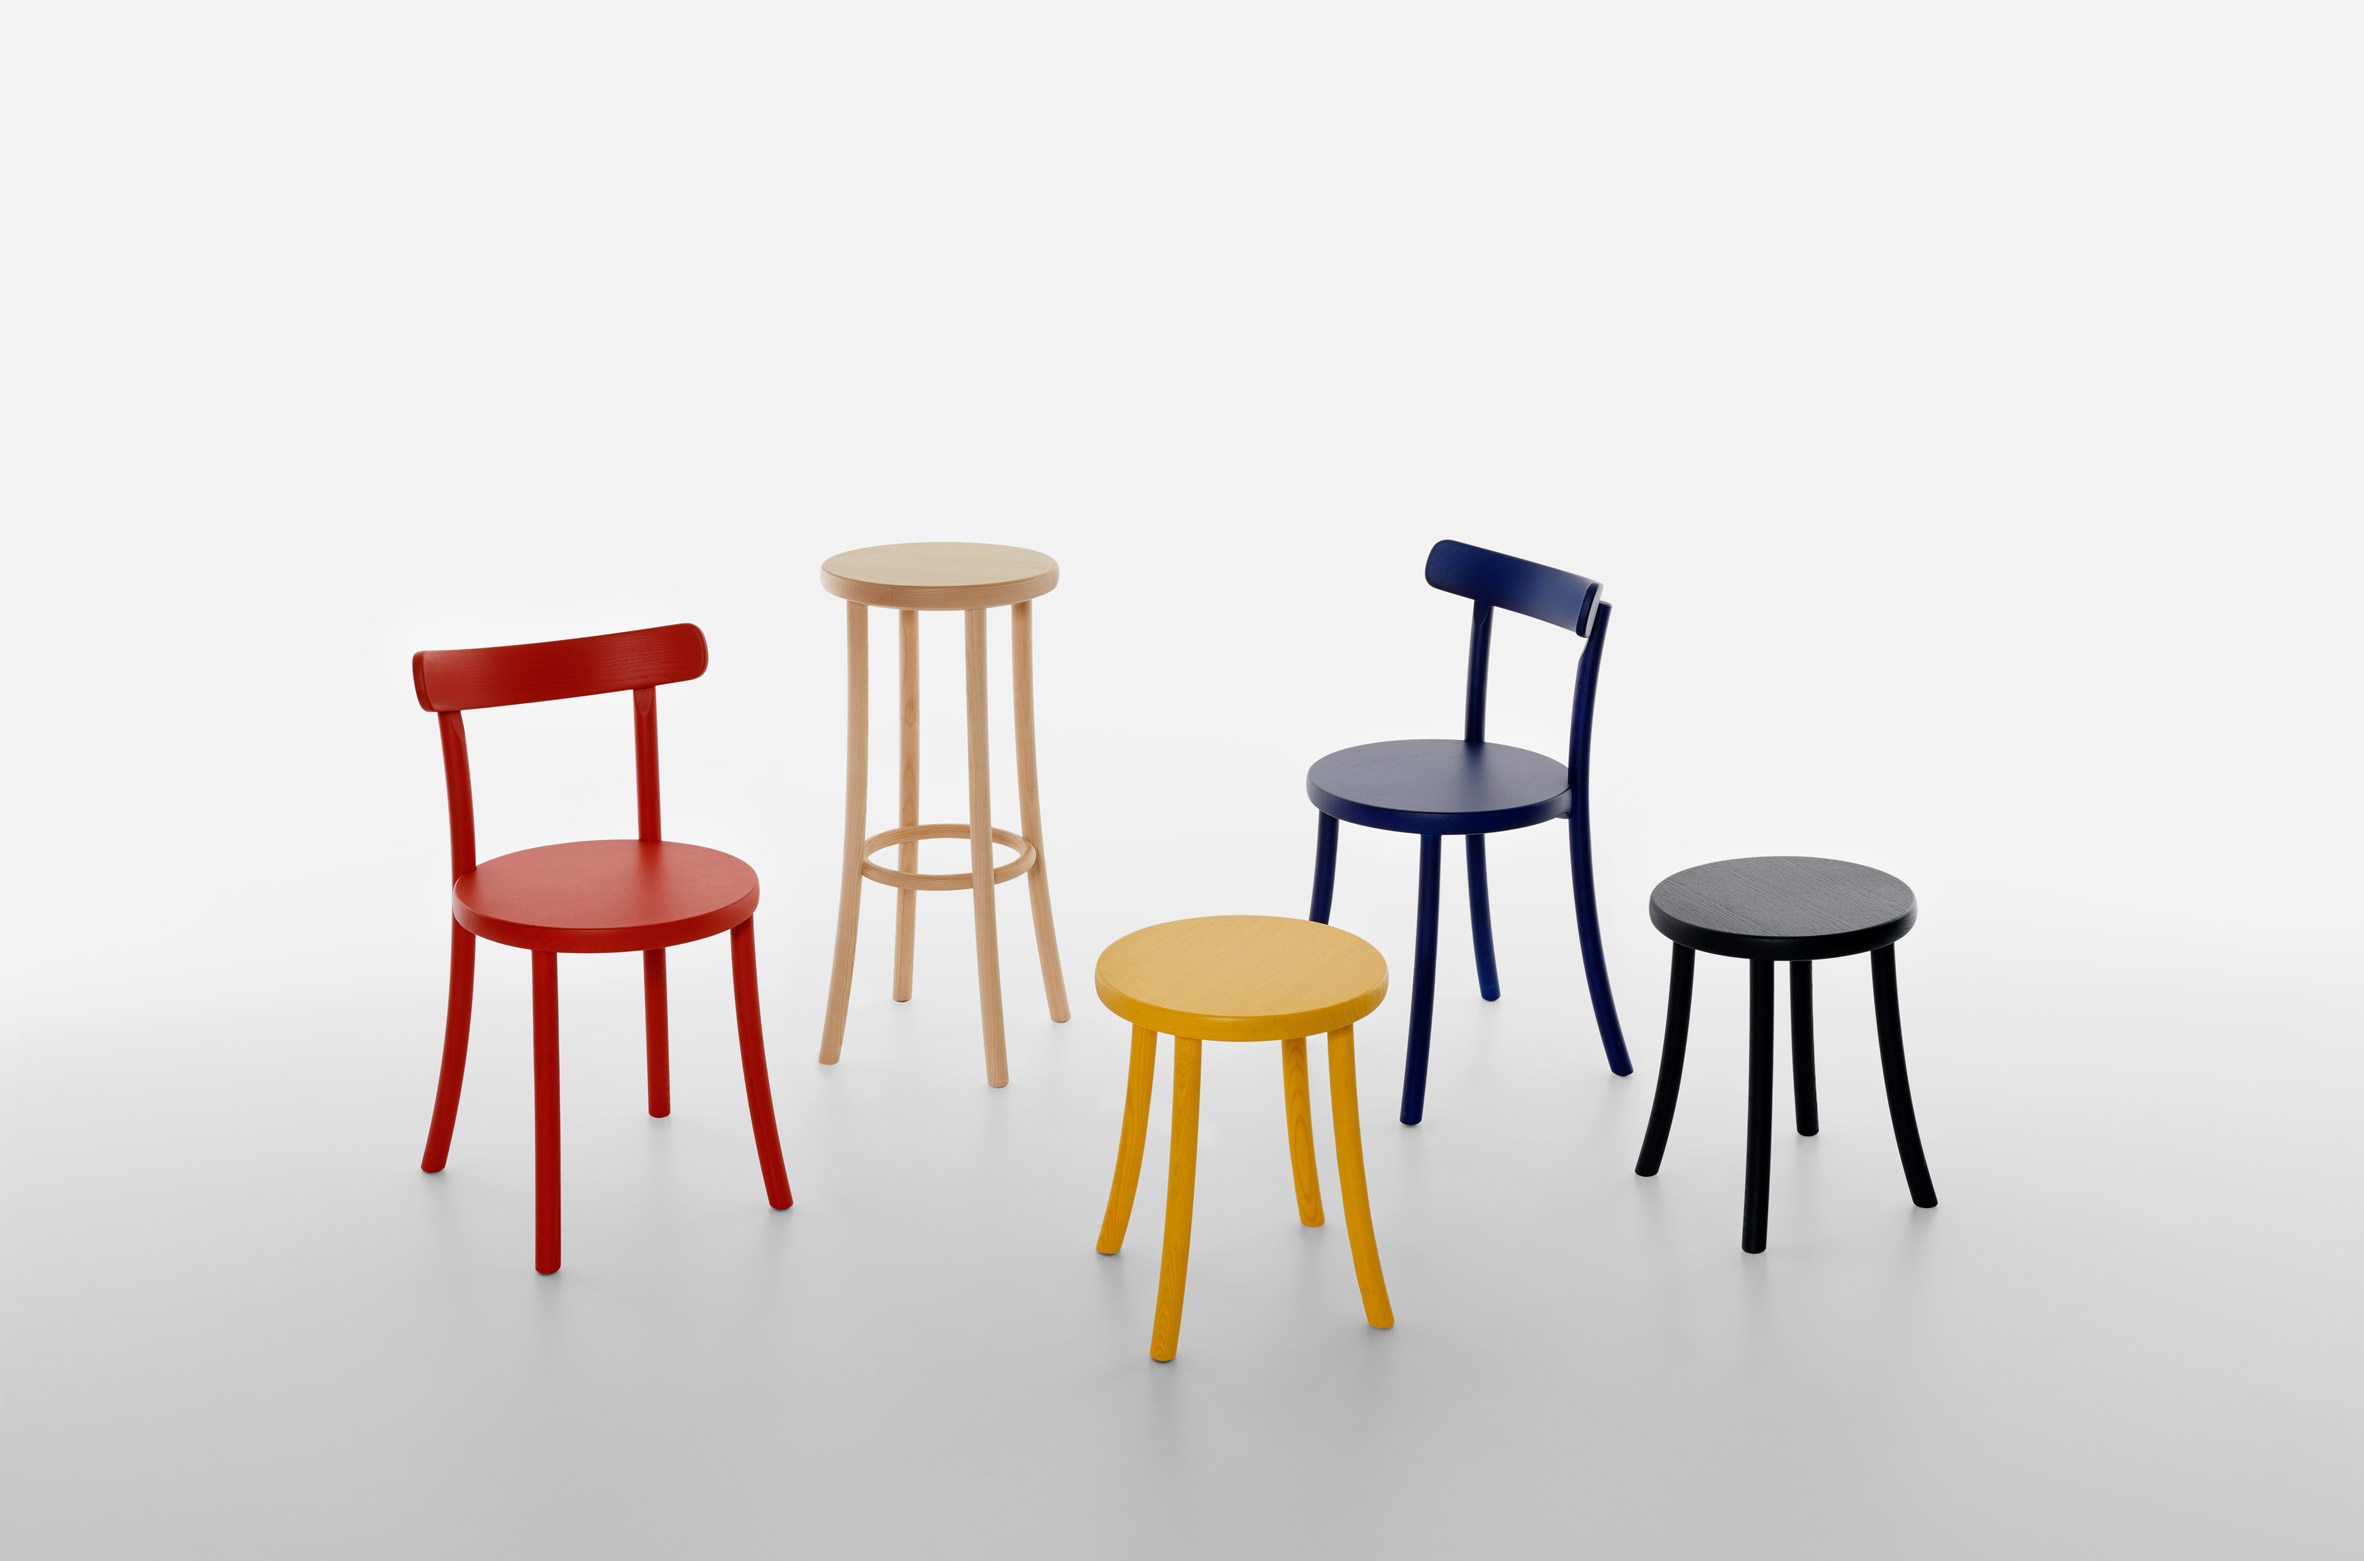 Zampa chairs and stools by Jasper Morrison for Mattiazzi